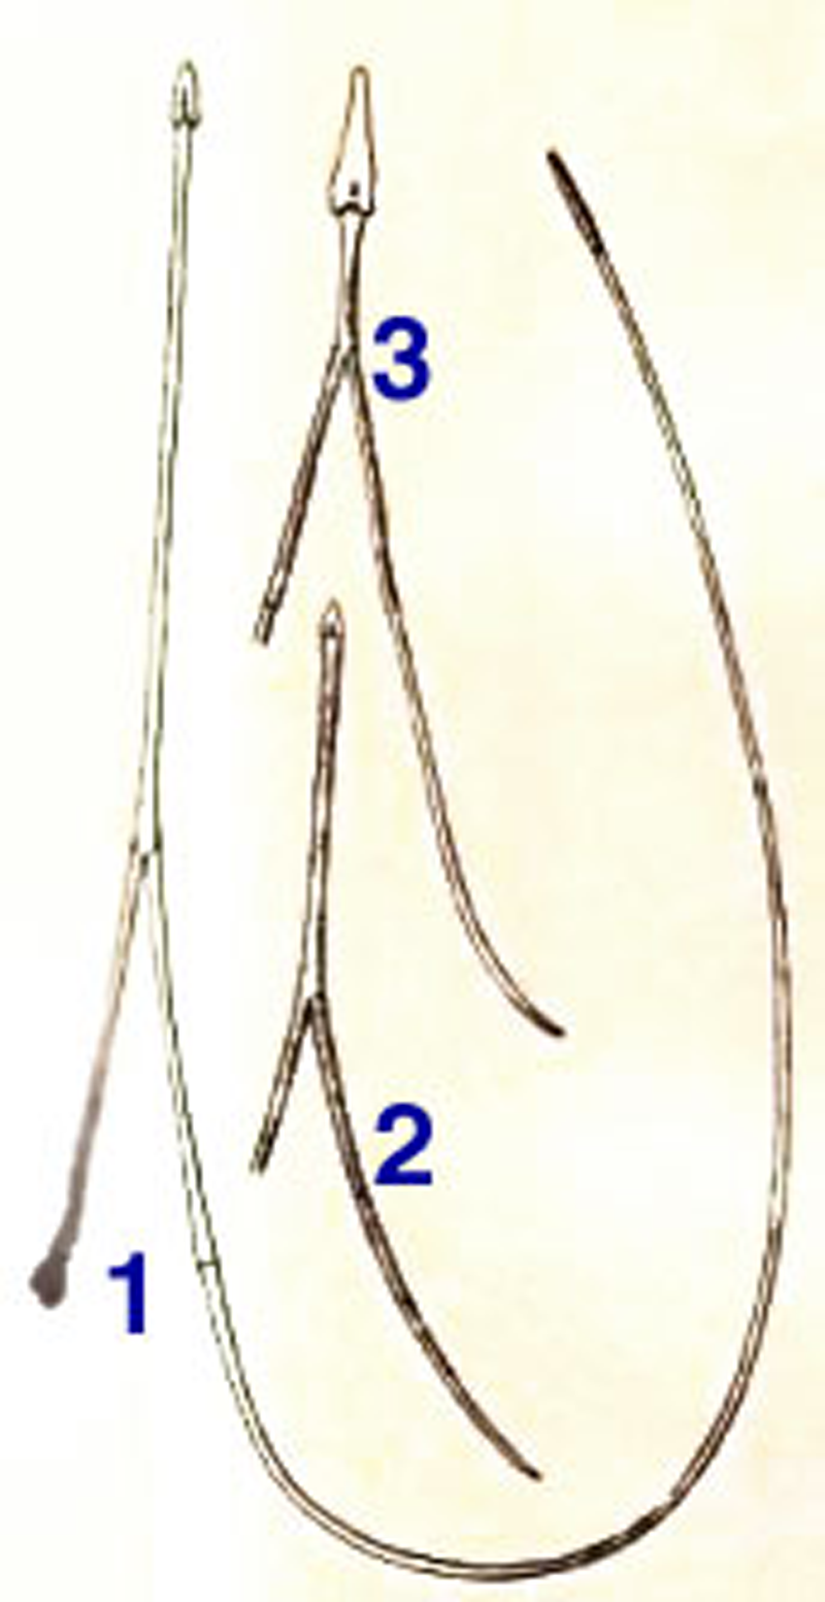 Görsel 5: 1) Colaptes auratus yetişkinine ait hyoid. 2) Yeni doğmuş Colaptes auratus türüne ait hyoid. 3) Syphyrapicus varius nuchalis yetişkinine ait hyoid.